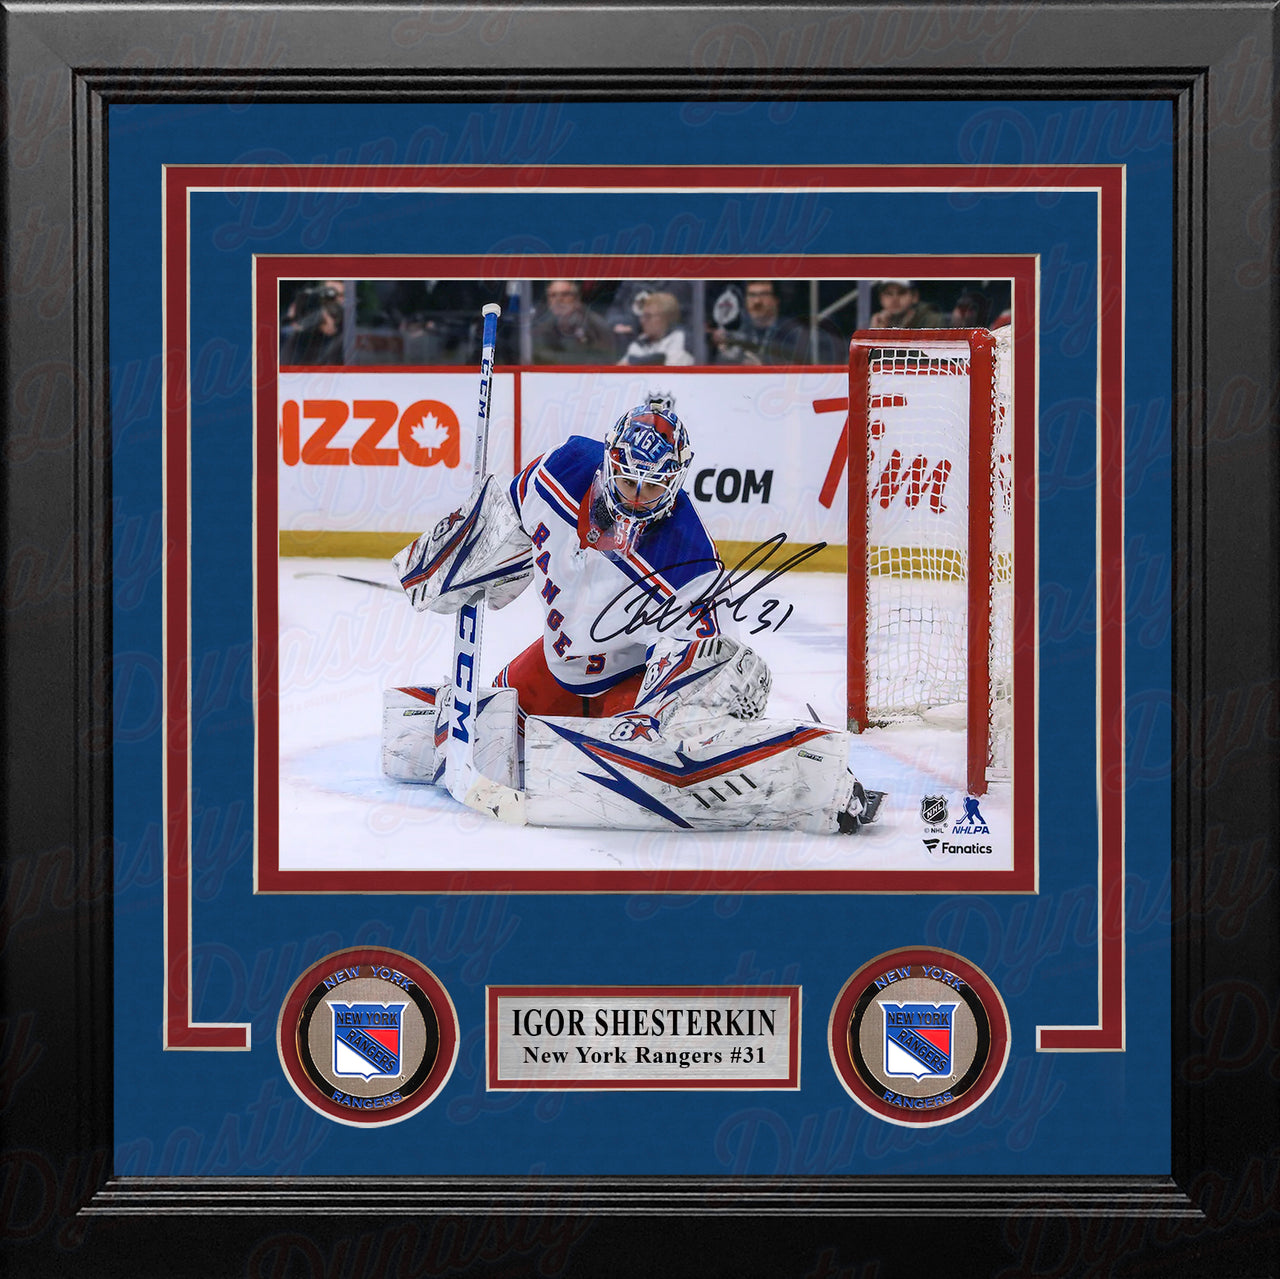 Igor Shesterkin Glove Save New York Rangers Autographed 8" x 10" Framed Hockey Photo - Dynasty Sports & Framing 